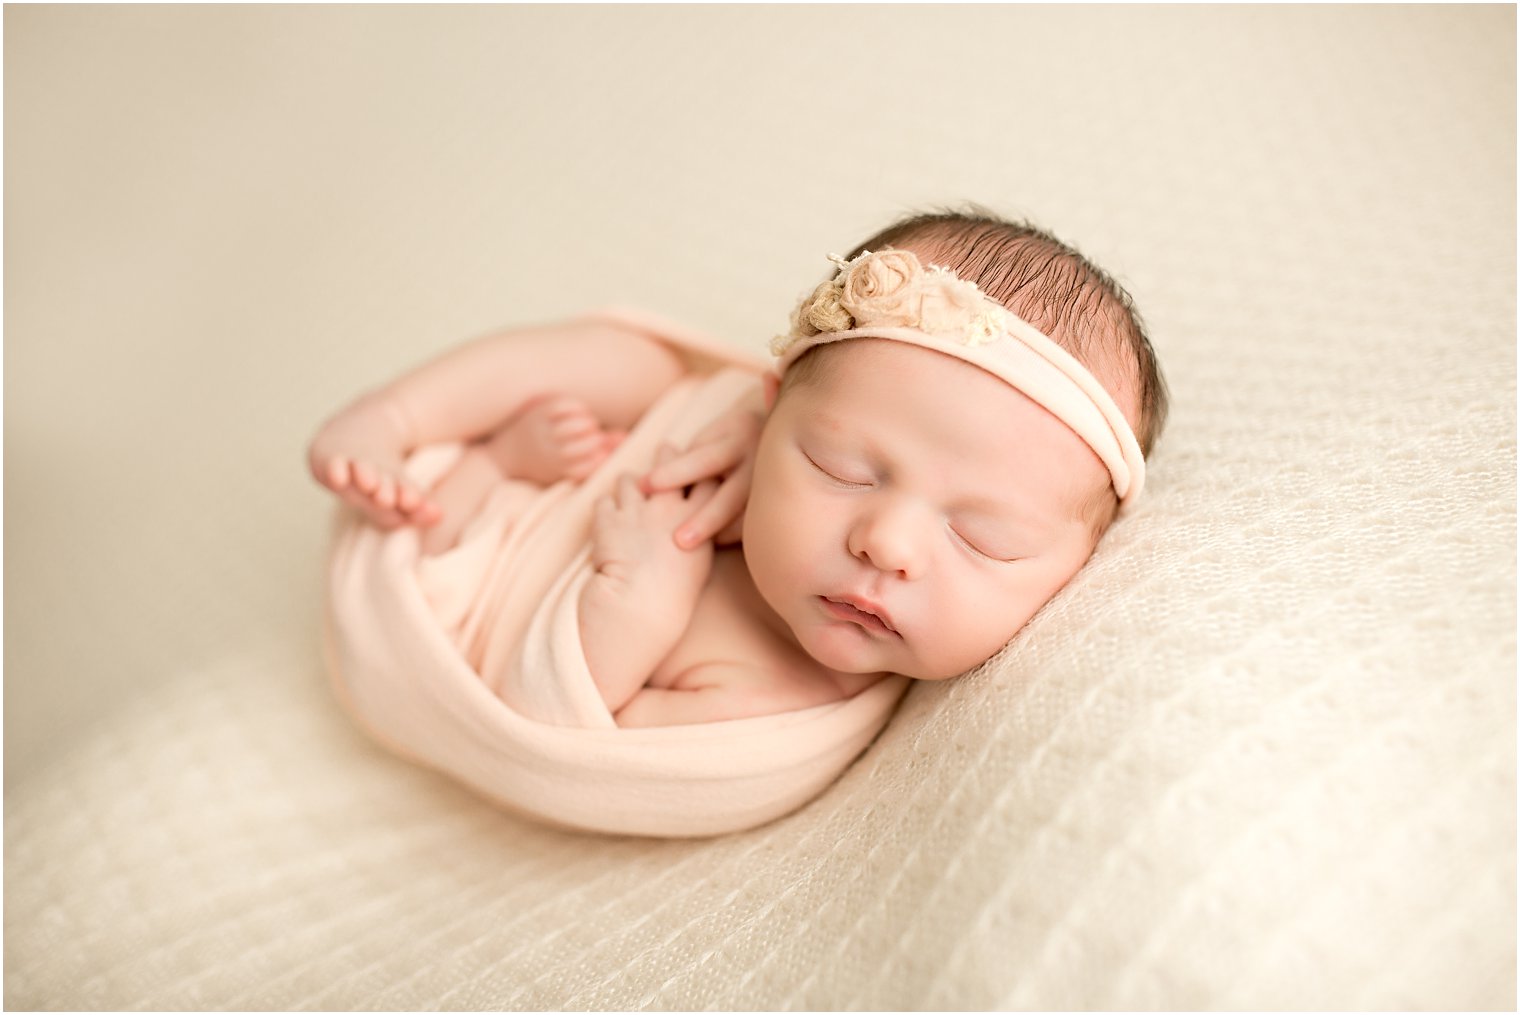 Sleeping baby girl in soft pink